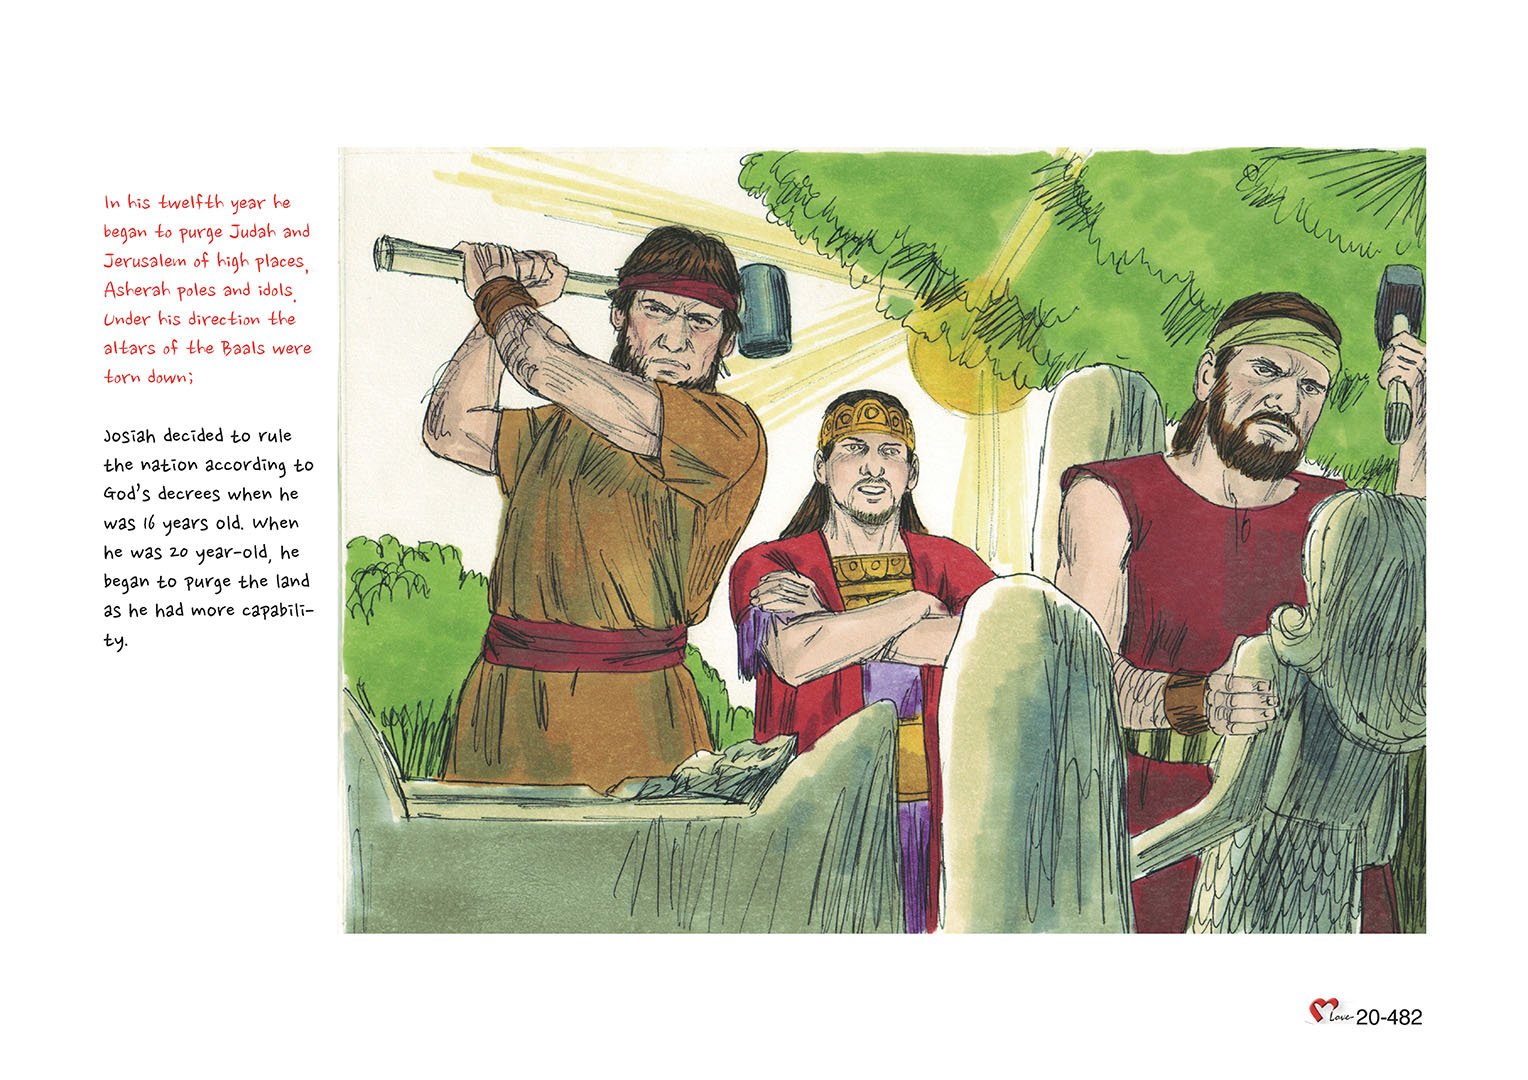 Chapter 20 - Lesson 65 - Kings of Southern Kingdom- Amon Josiah